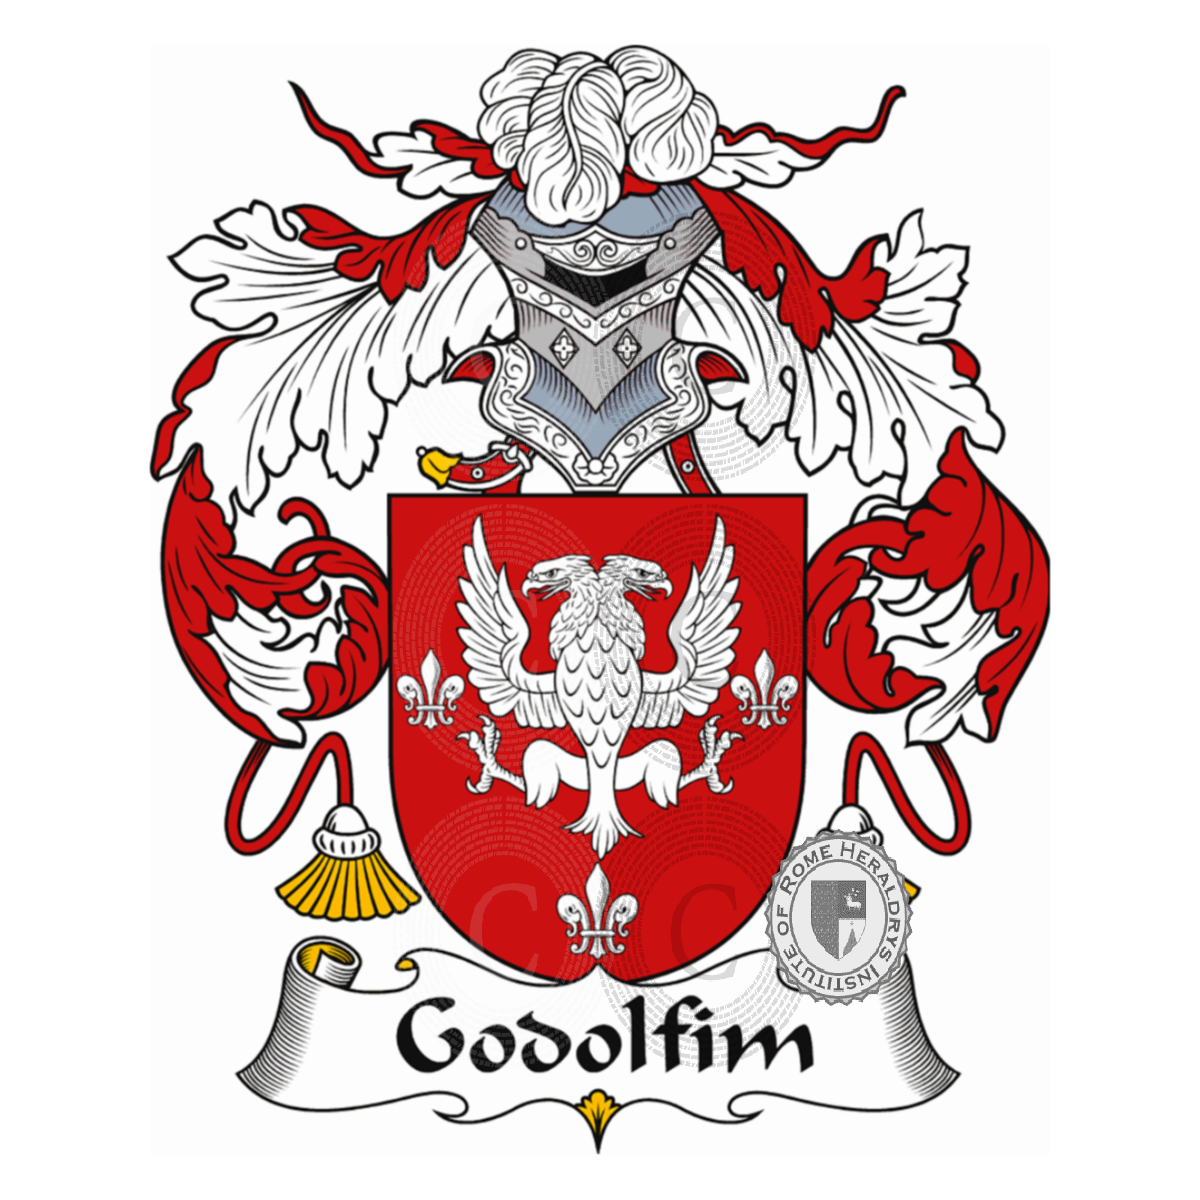 Stemma della famigliaGodolfim, Godolfin,Godolphim,Godolphin